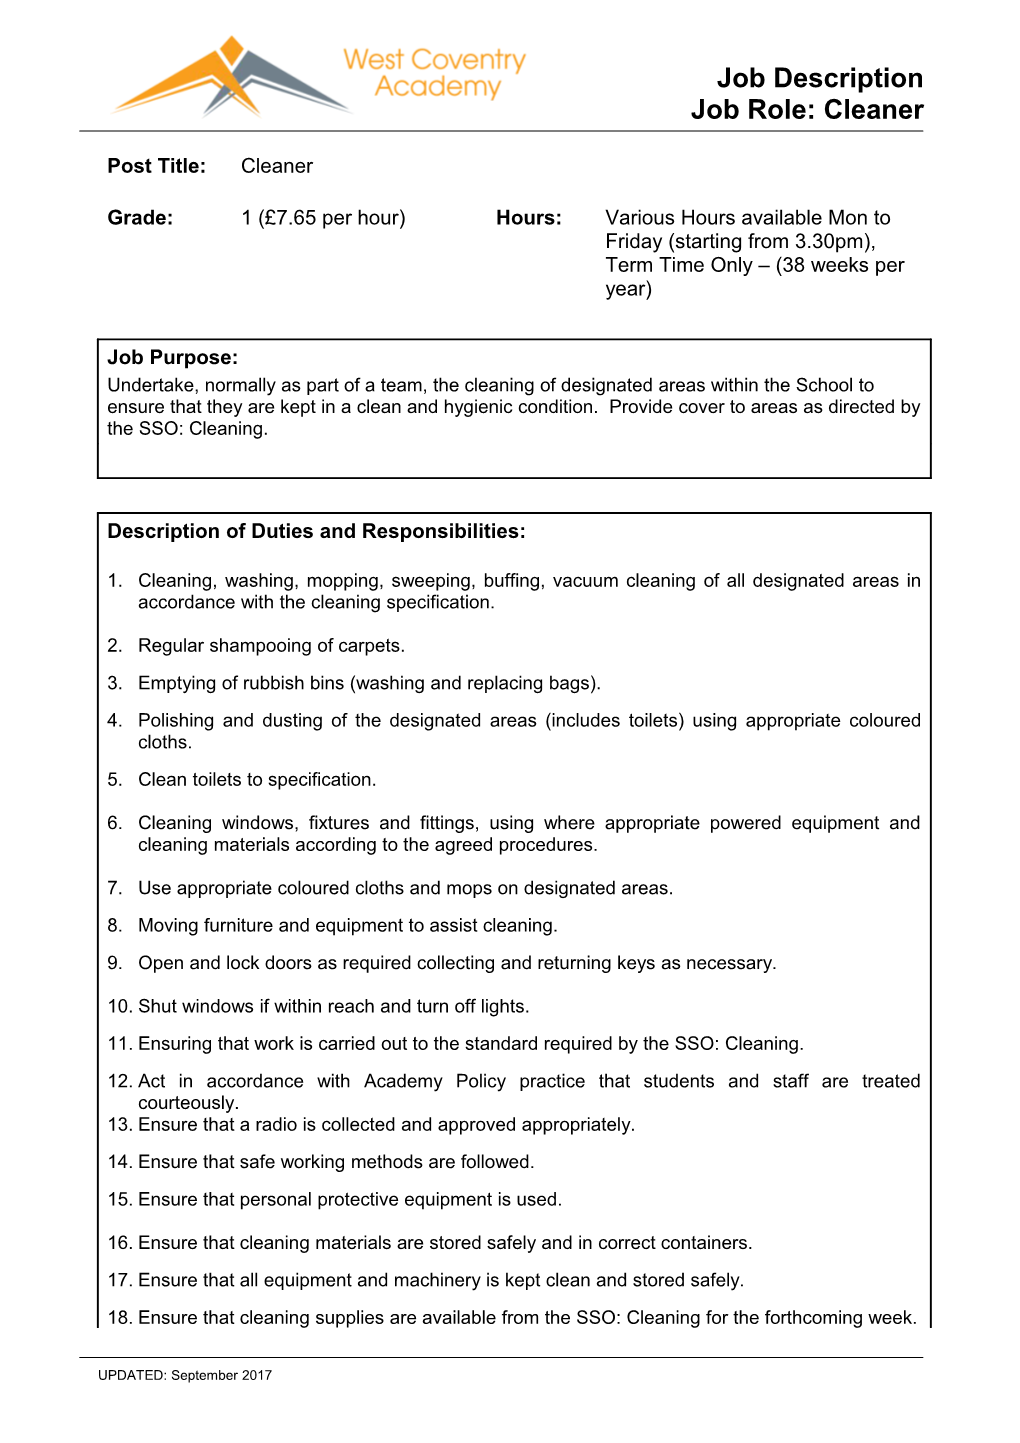 Person Specification for Deputy Headteacher